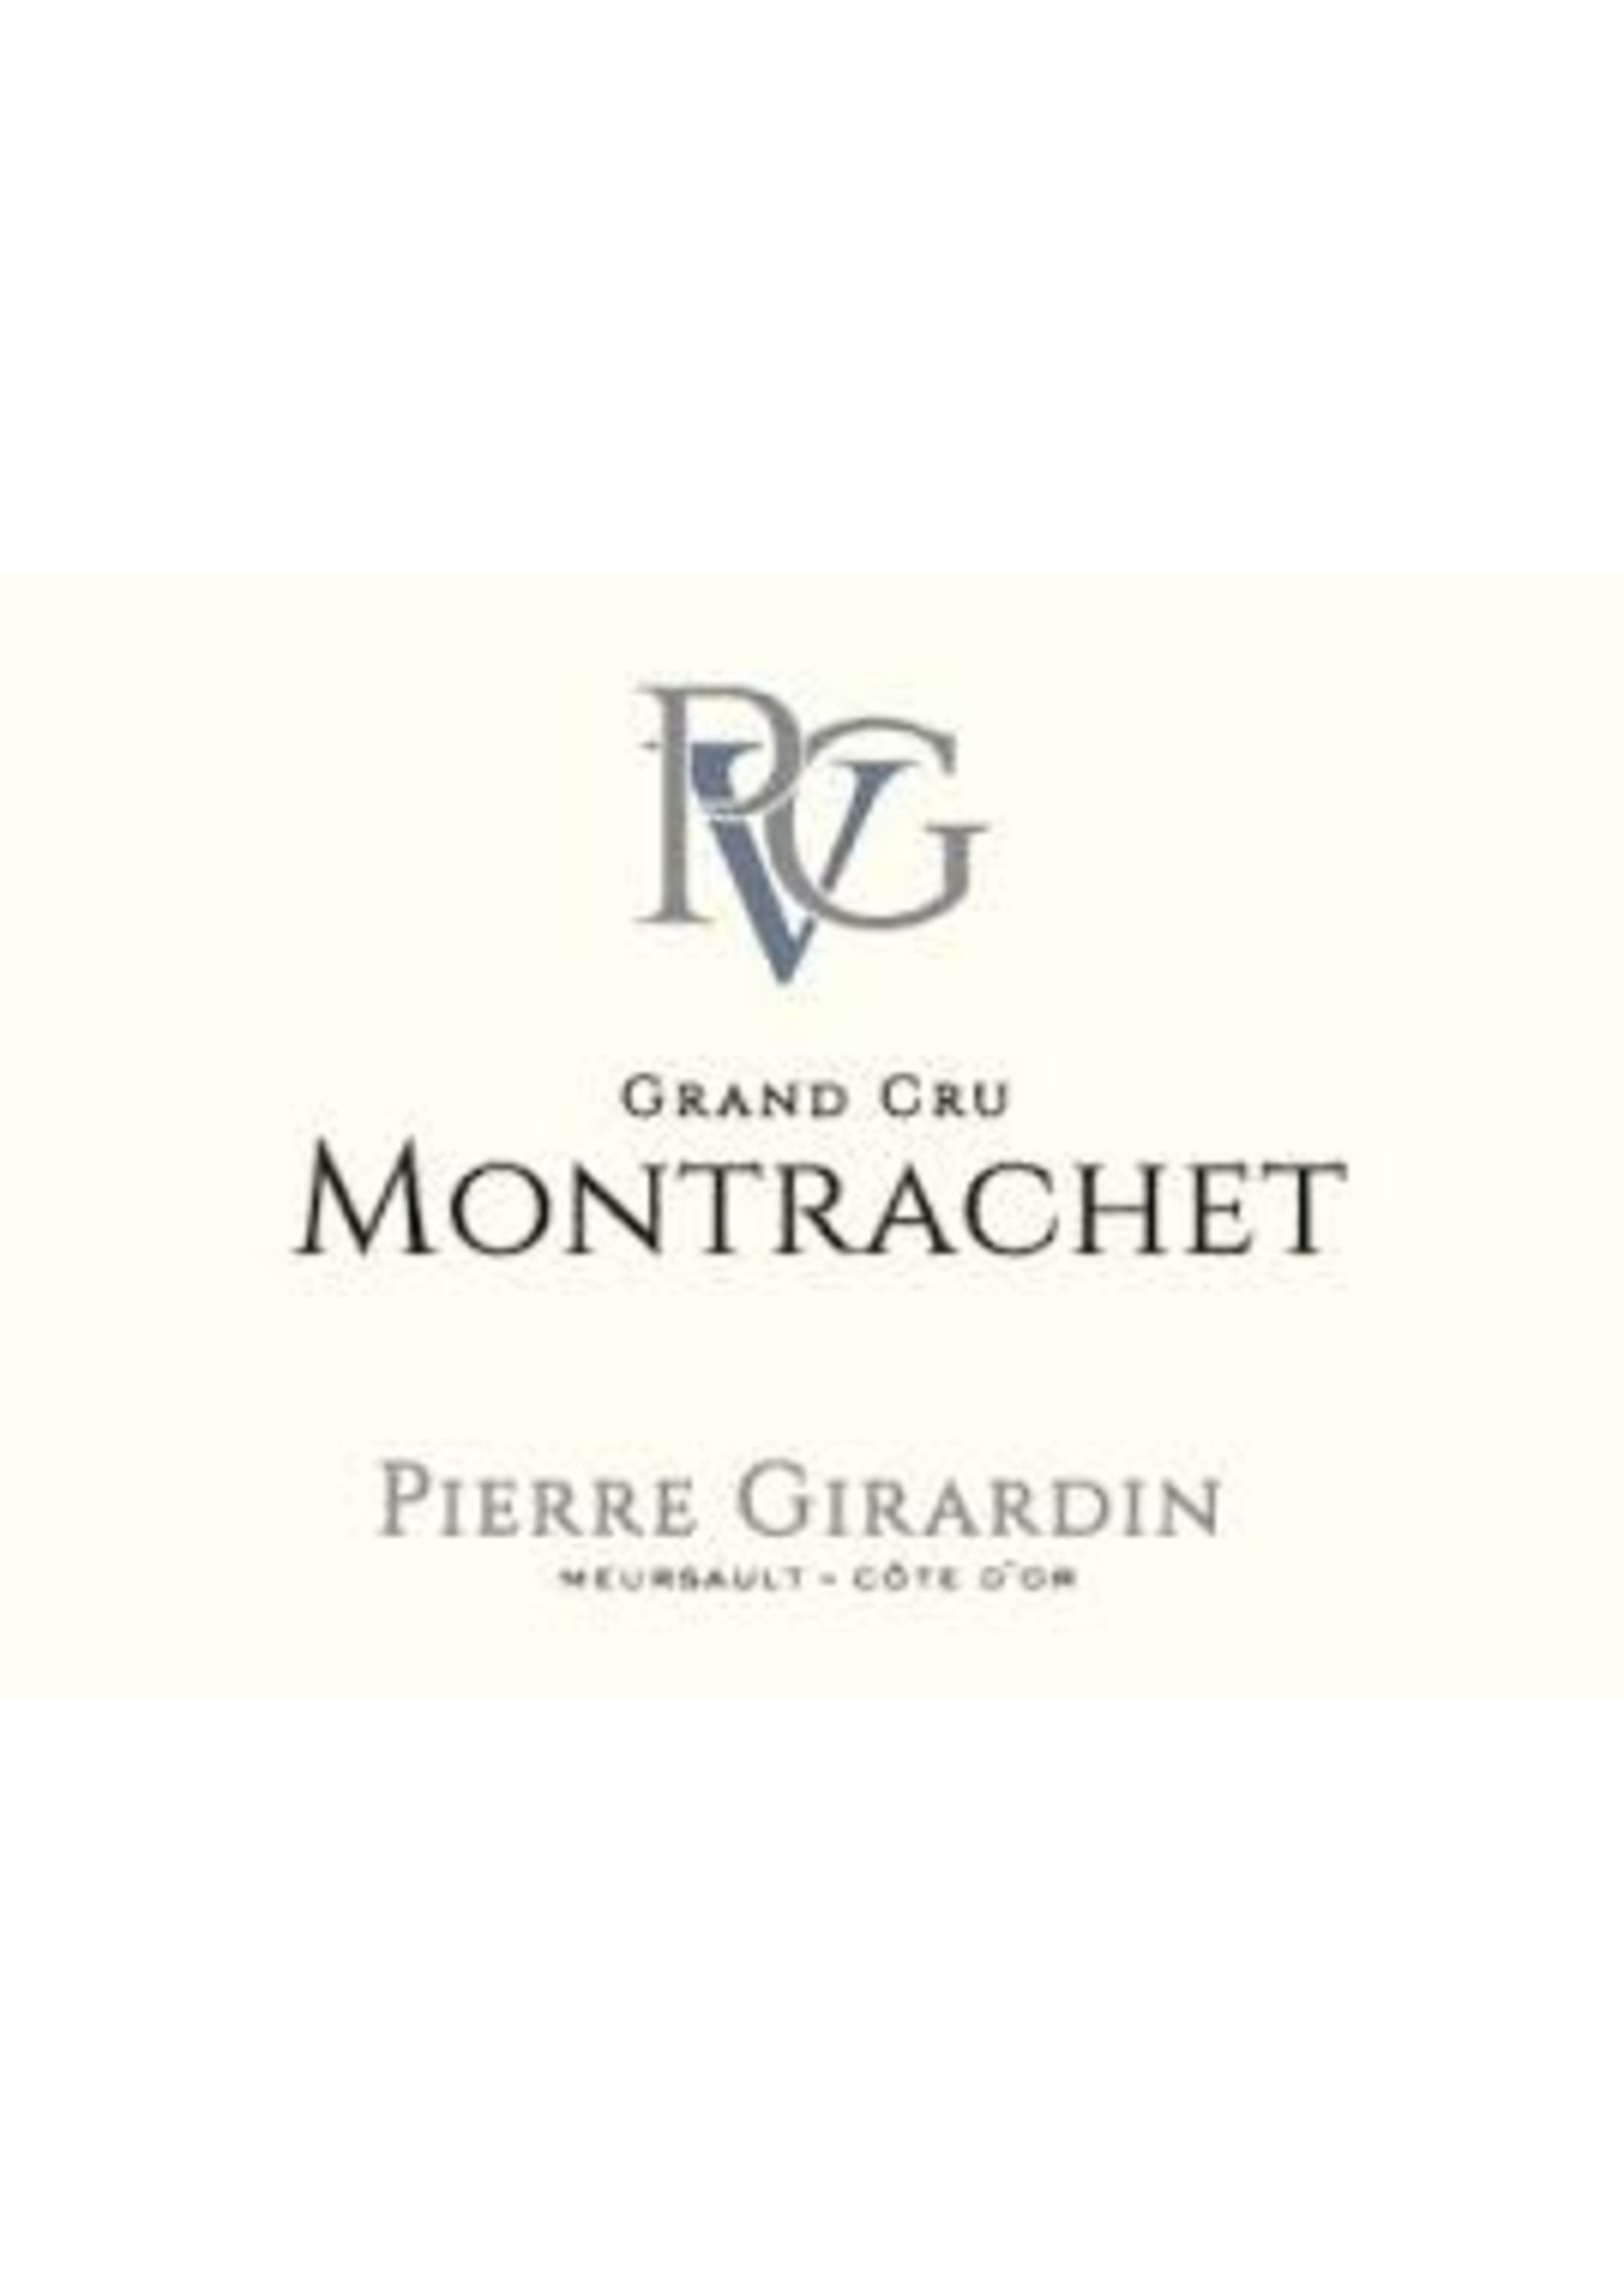 Pierre Girardin 2020 Montrachet Grand Cru 750ml